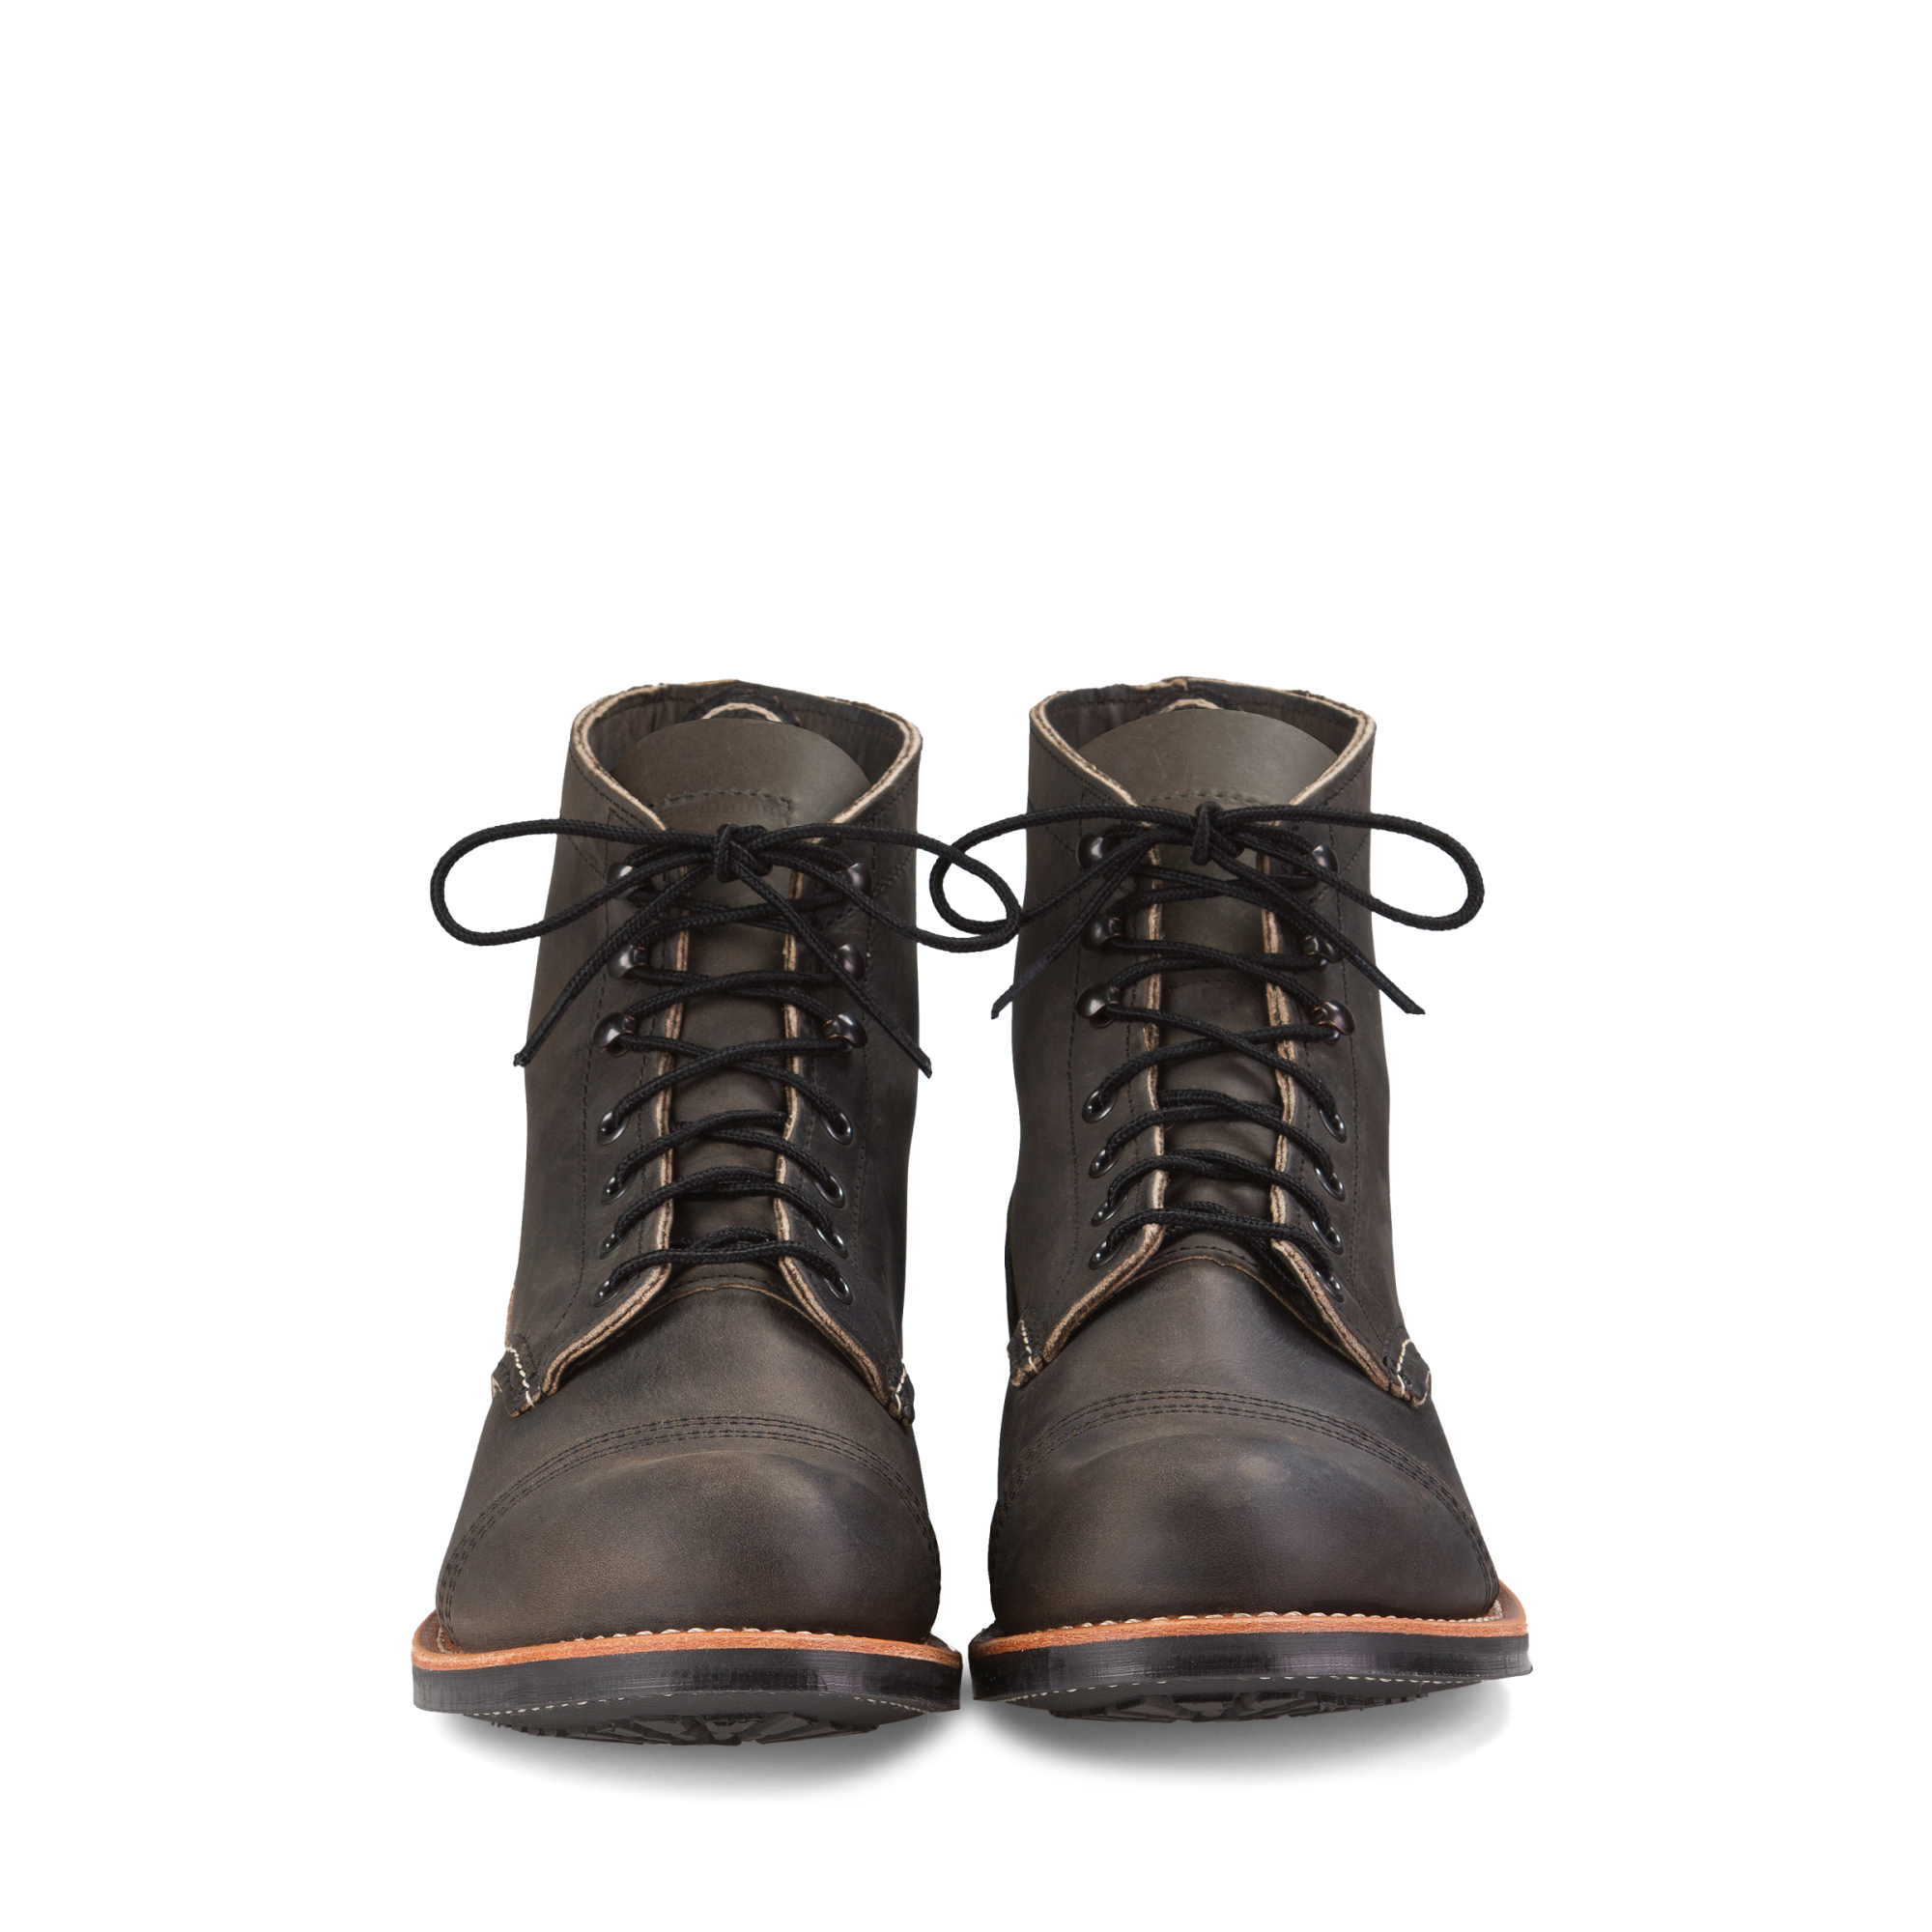 Redwing Women’s Iron Ranger Boots, Size: 7